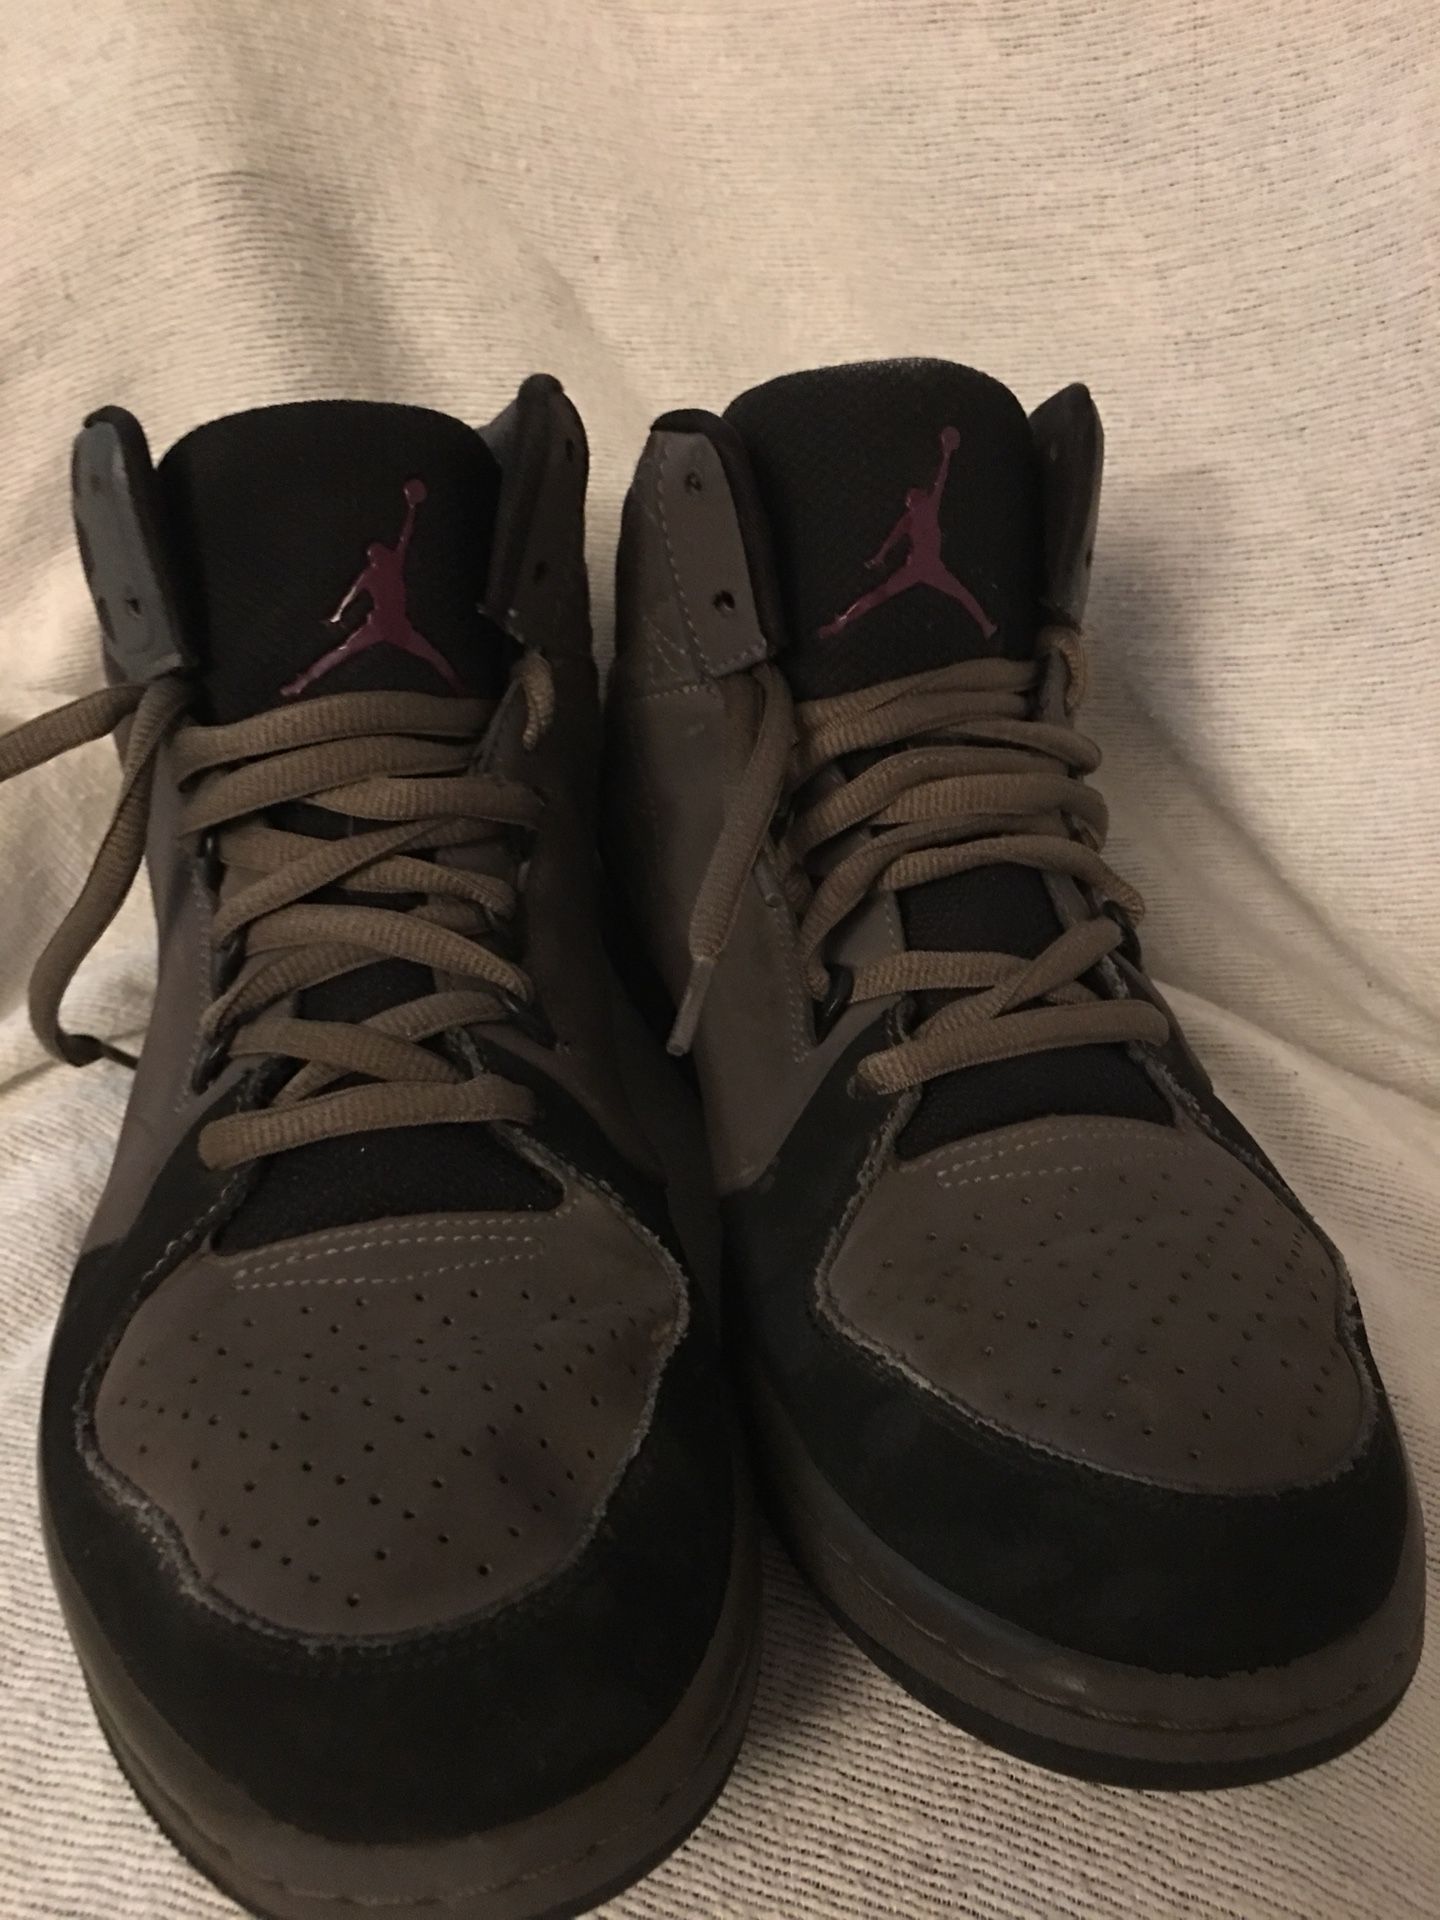 Nike Air Jordan 1 Flight 3 Sneakers Graphite/Bordeaux-Black 706954-015 Sz 12 Good Condition see pics new shoe strings